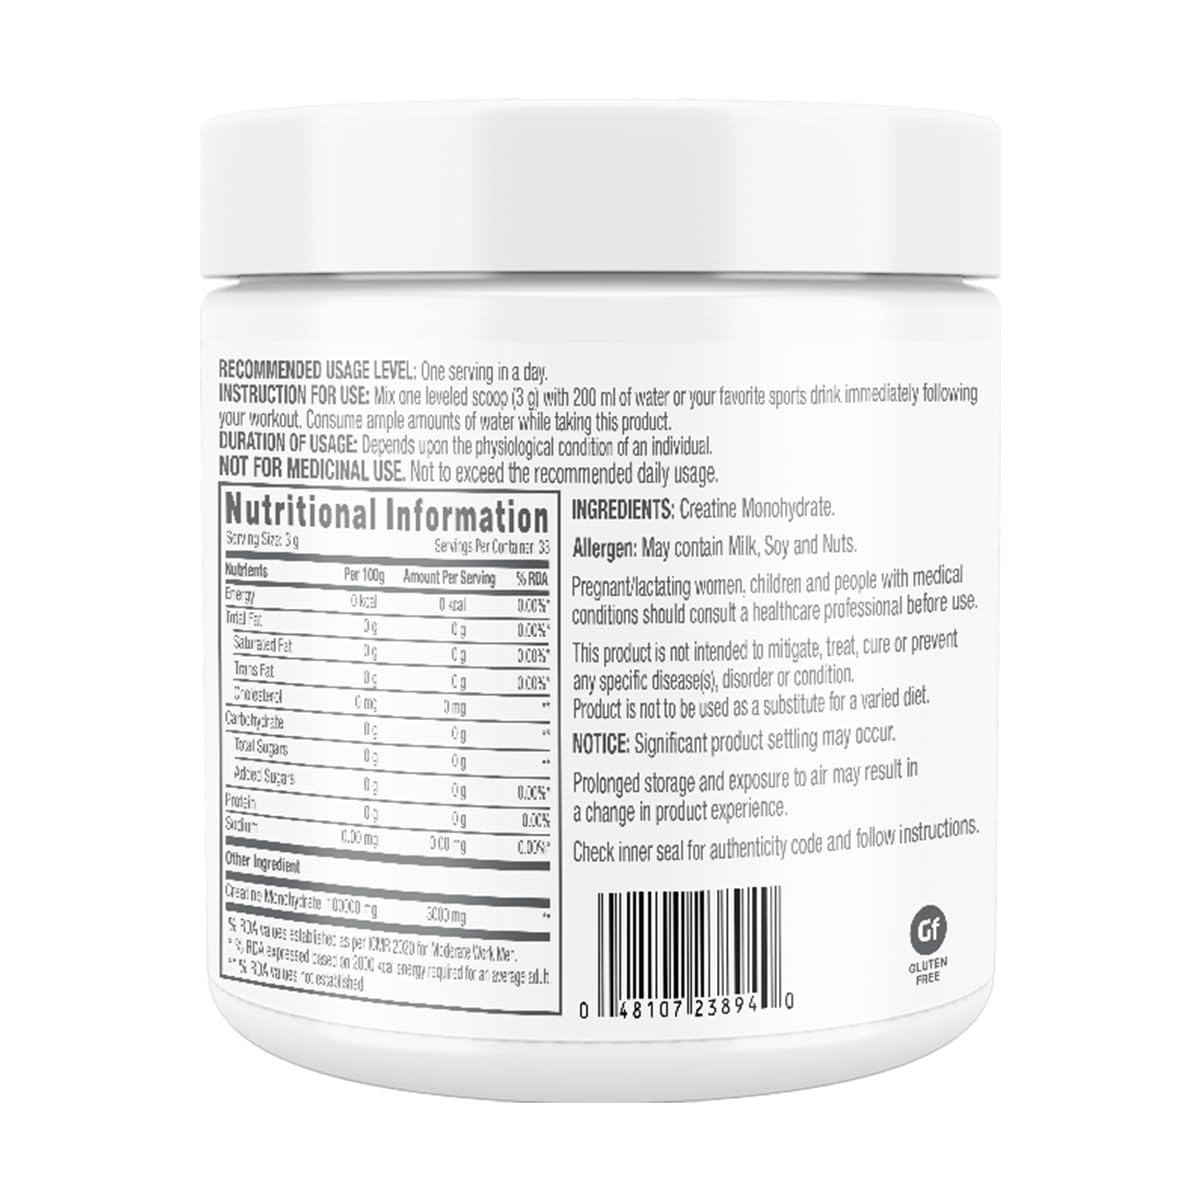 GNC Pro Performance Creatine Monohydrate 100g - 33 Servings